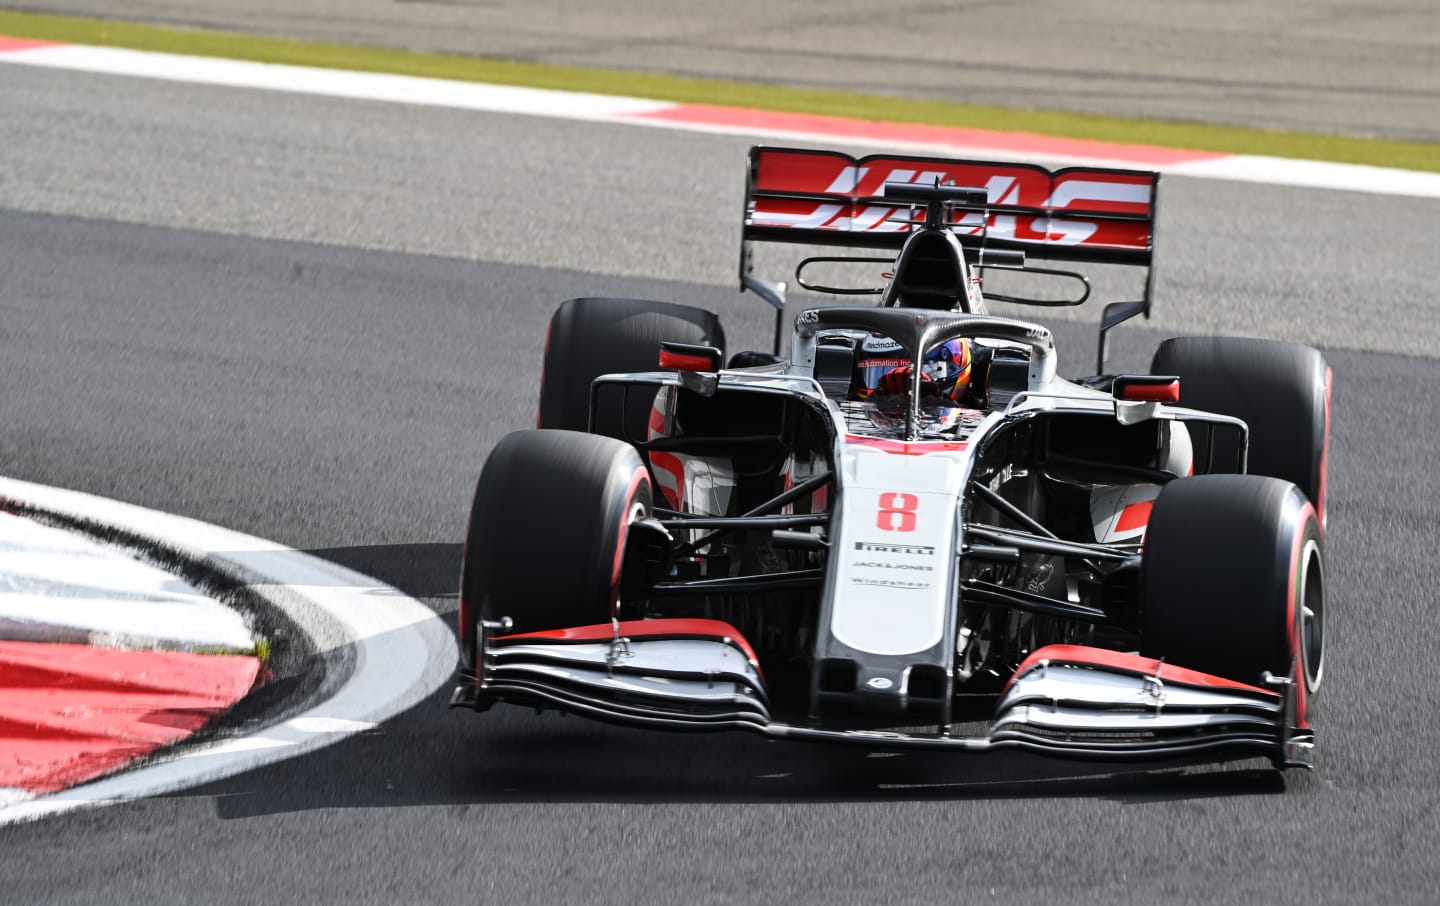 NUERBURG, GERMANY - OCTOBER 10: Romain Grosjean of France driving the (8) Haas F1 Team VF-20